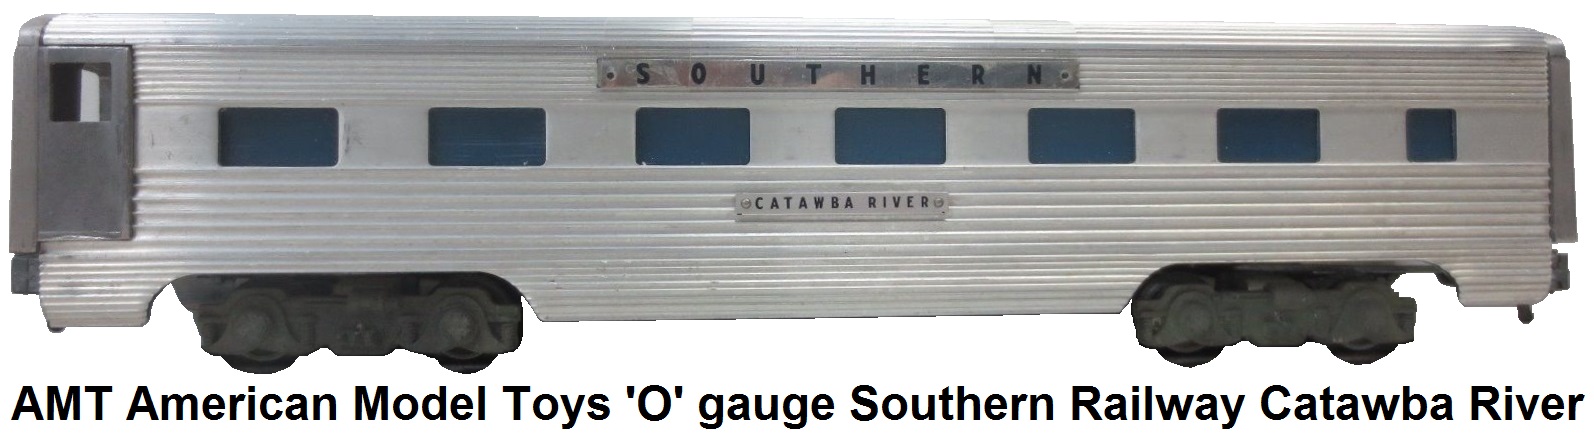 AMT American Model Toys 'O' gauge Southern Railway Catawba River Pullman